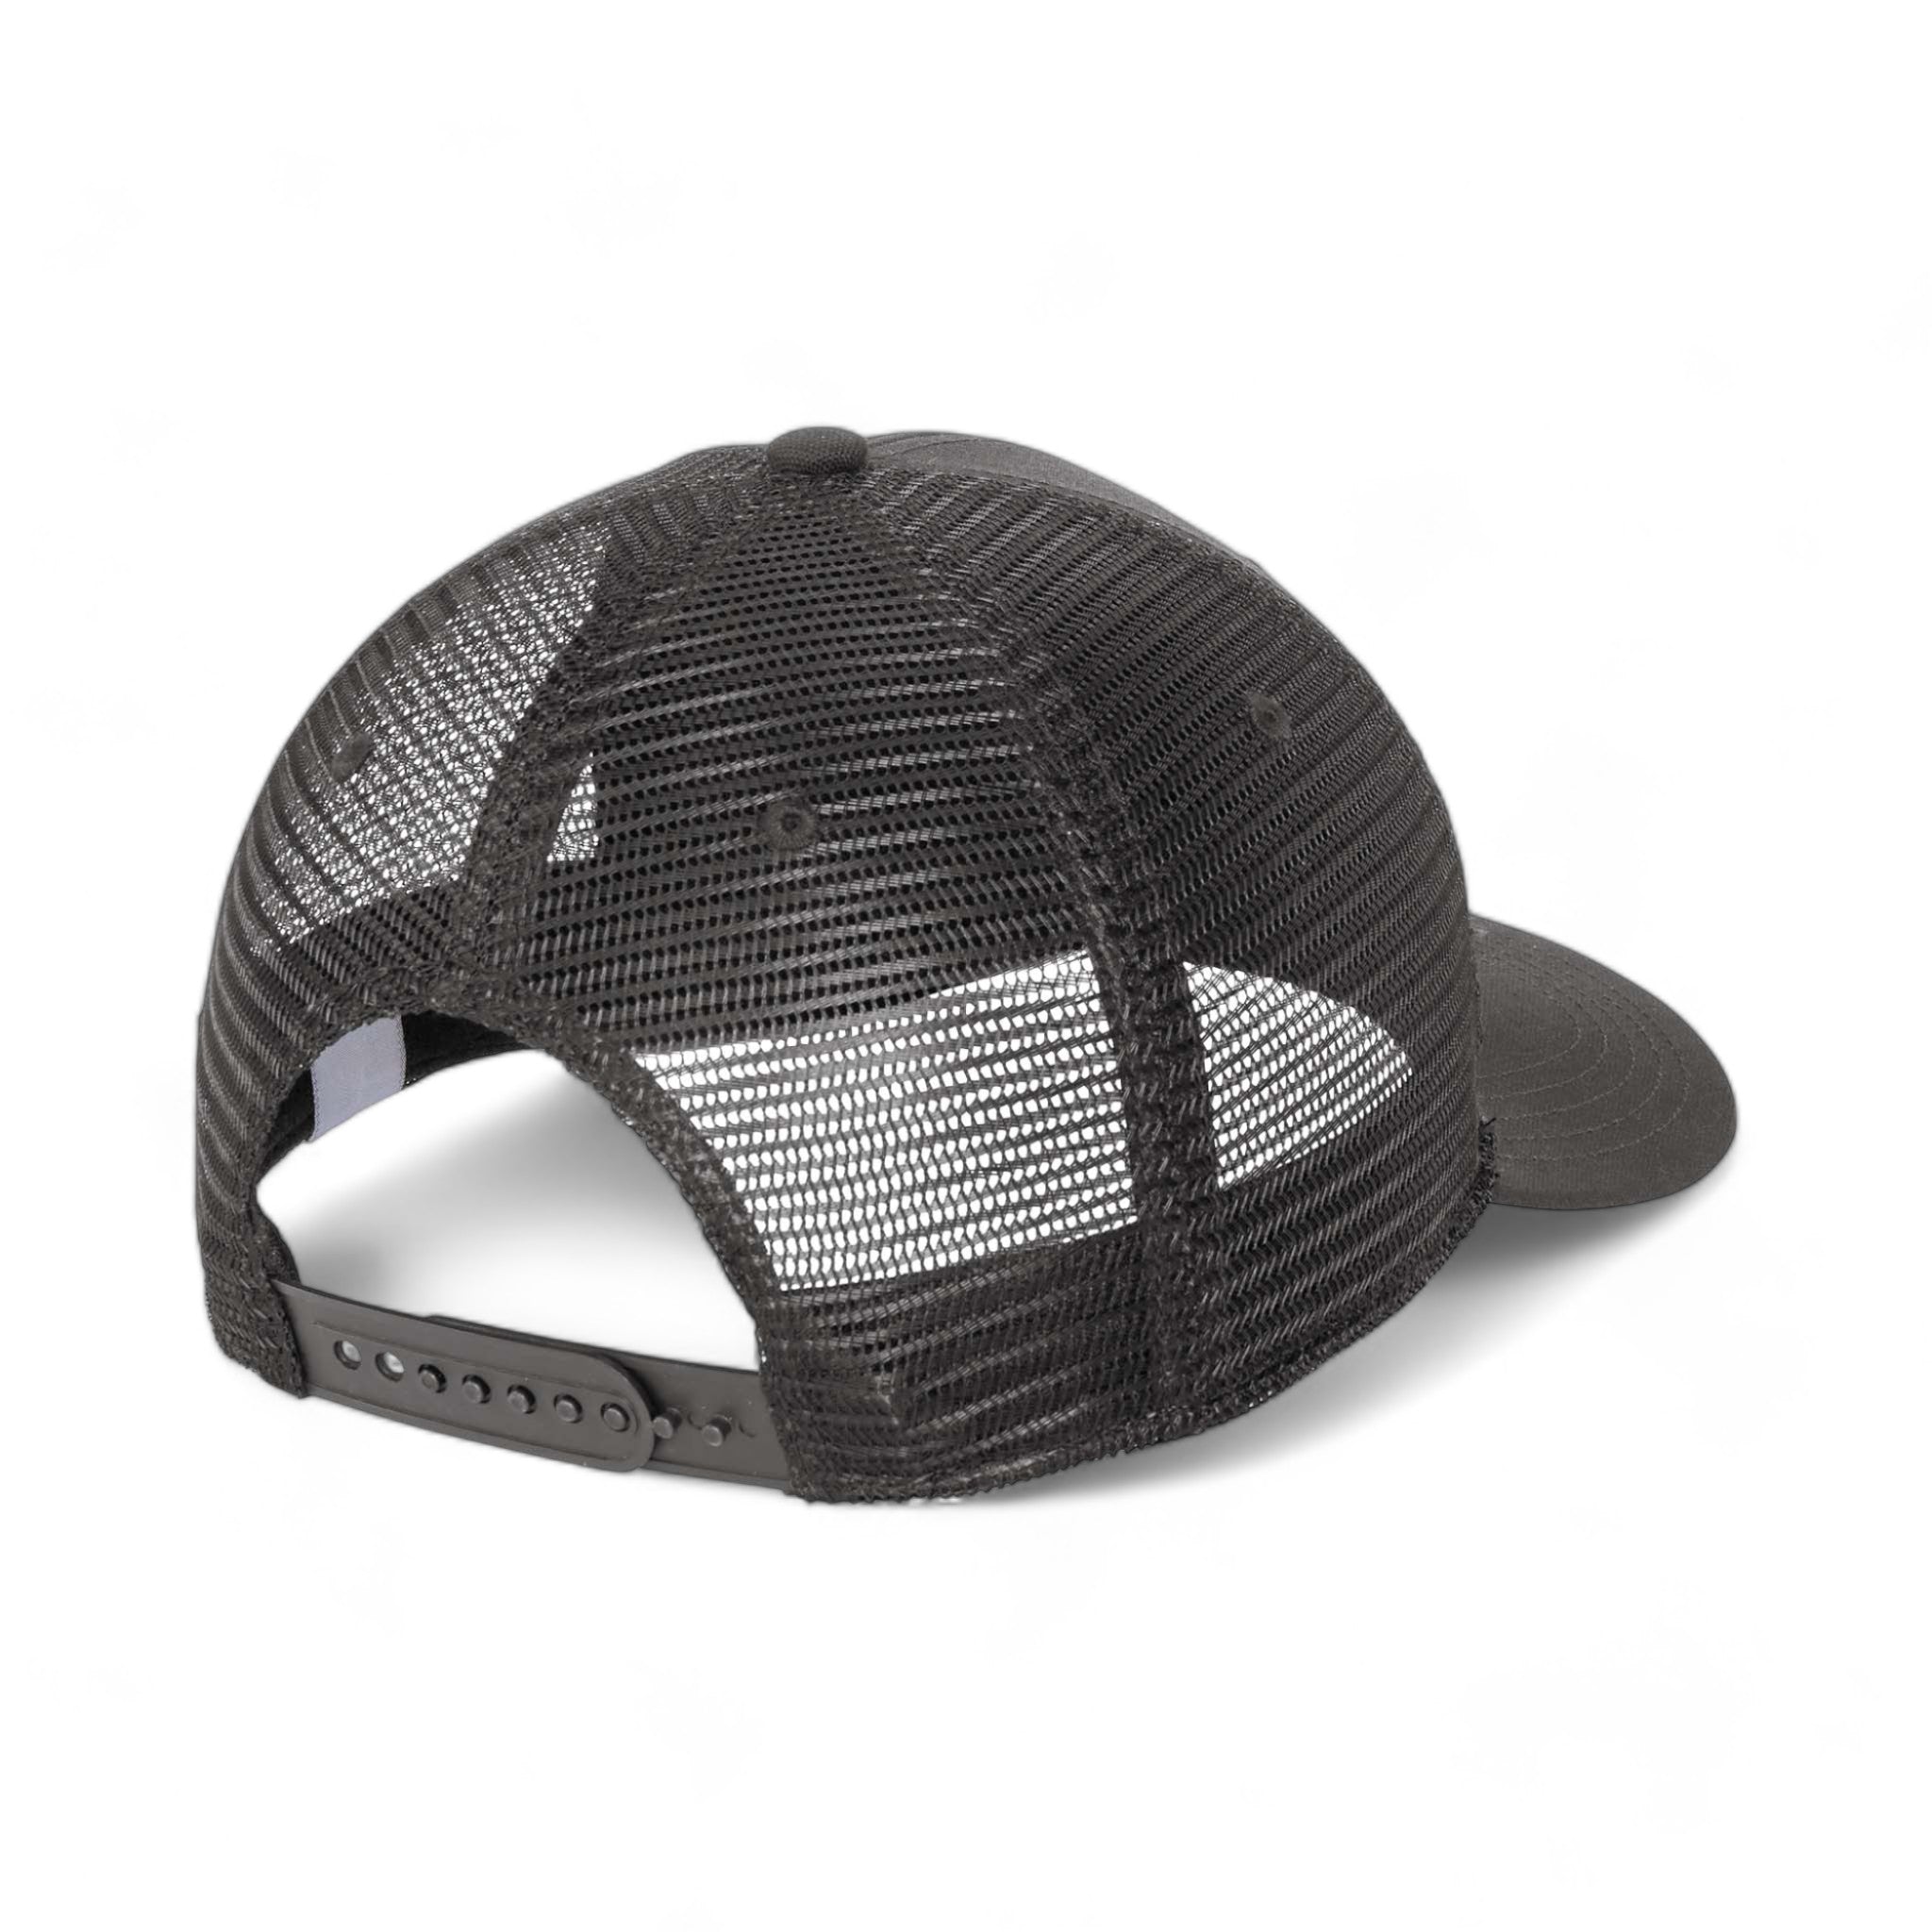 Back view of Carhartt CT105298 custom hat in shadow grey